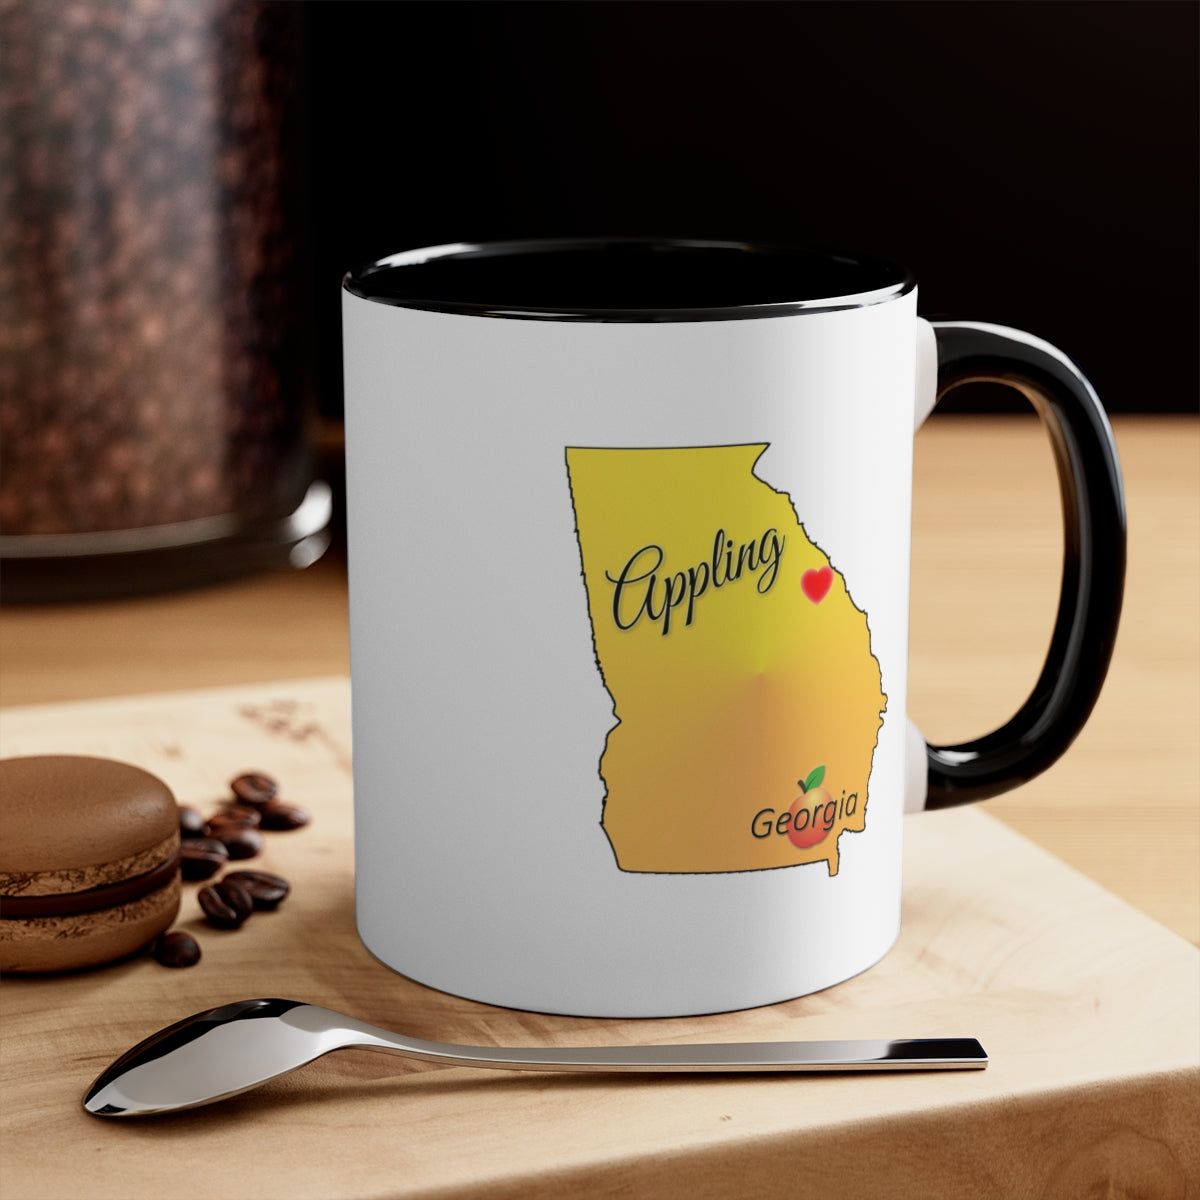 Appling Georgia Accent Coffee Mug, 11oz